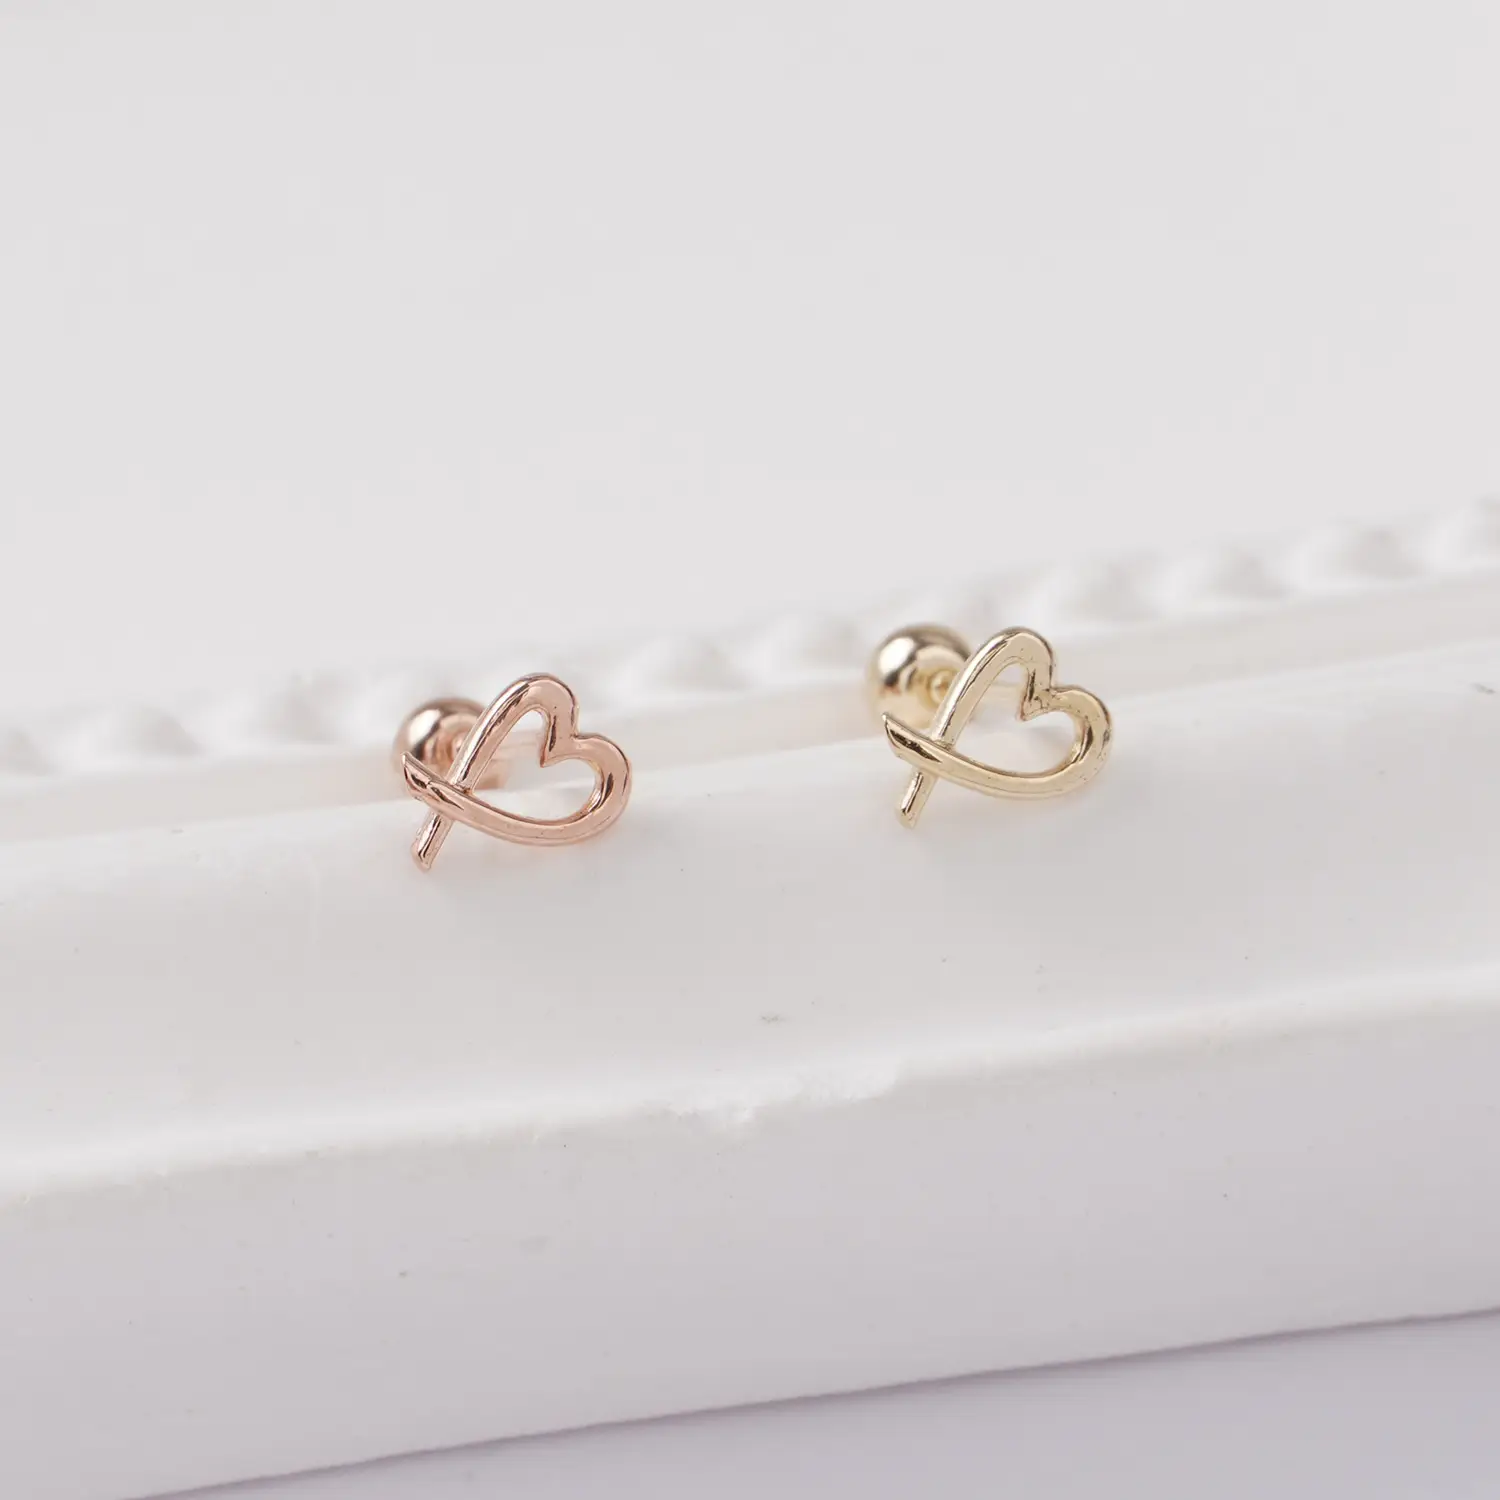 [Artpierce] 14k Gold Heart Drawing Line Basic Piercing Establishing Itself As A Top Brand In The Jewelry Industry Made In Korea